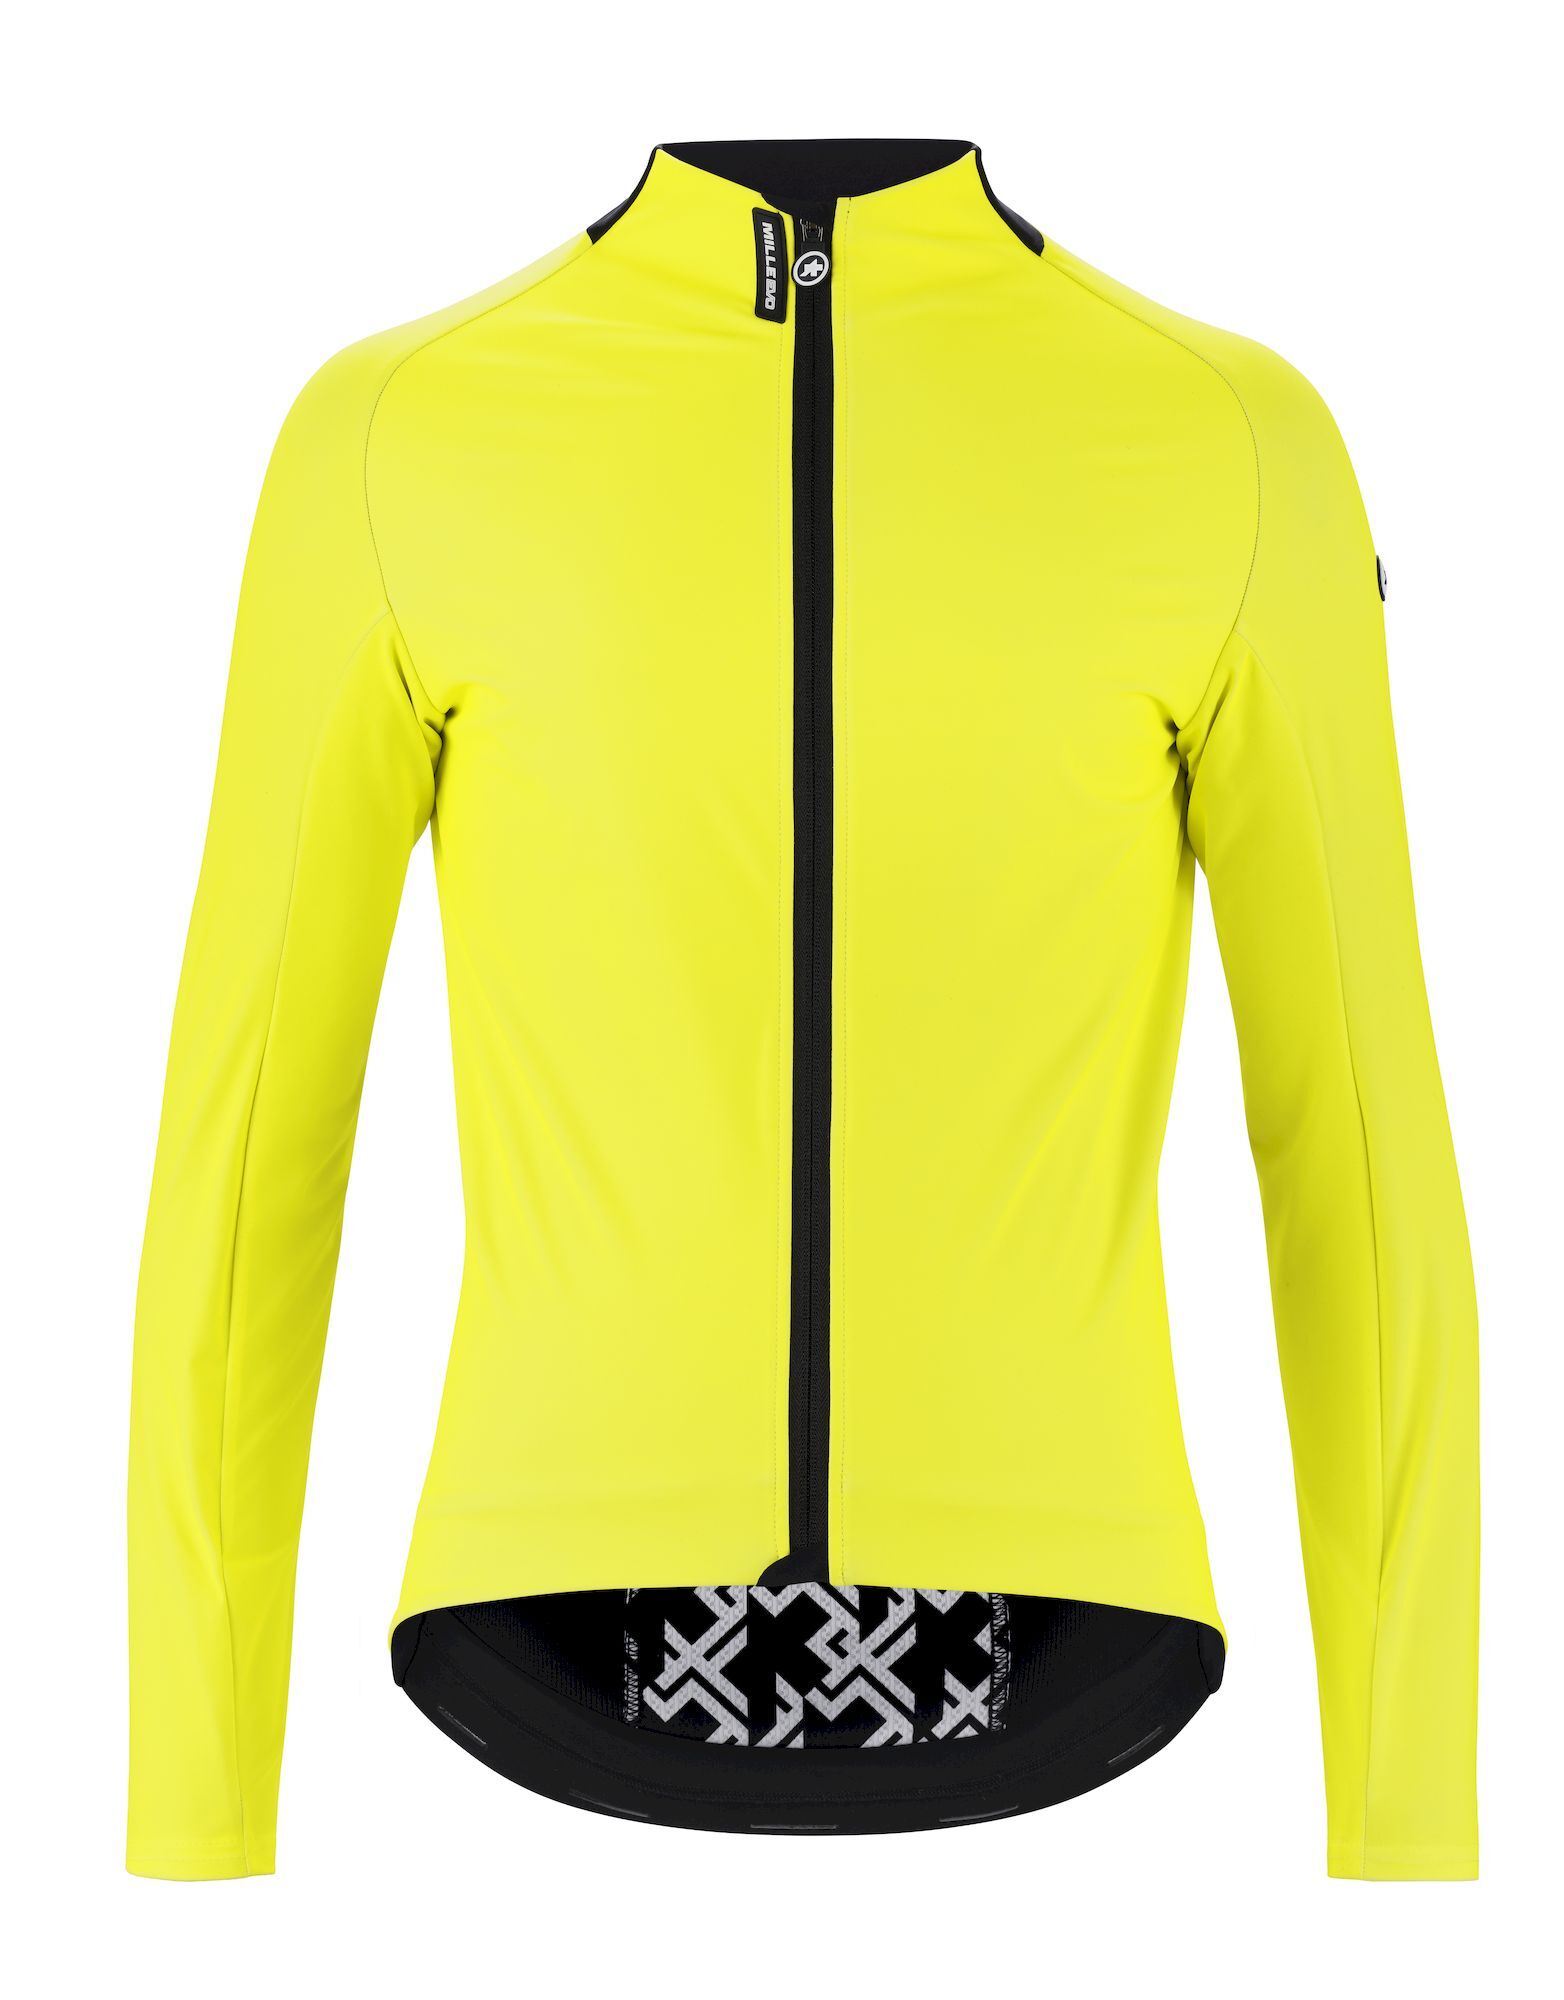 Assos MILLE GT Ultraz Winter Jacket EVO - Cycling jacket - Men's